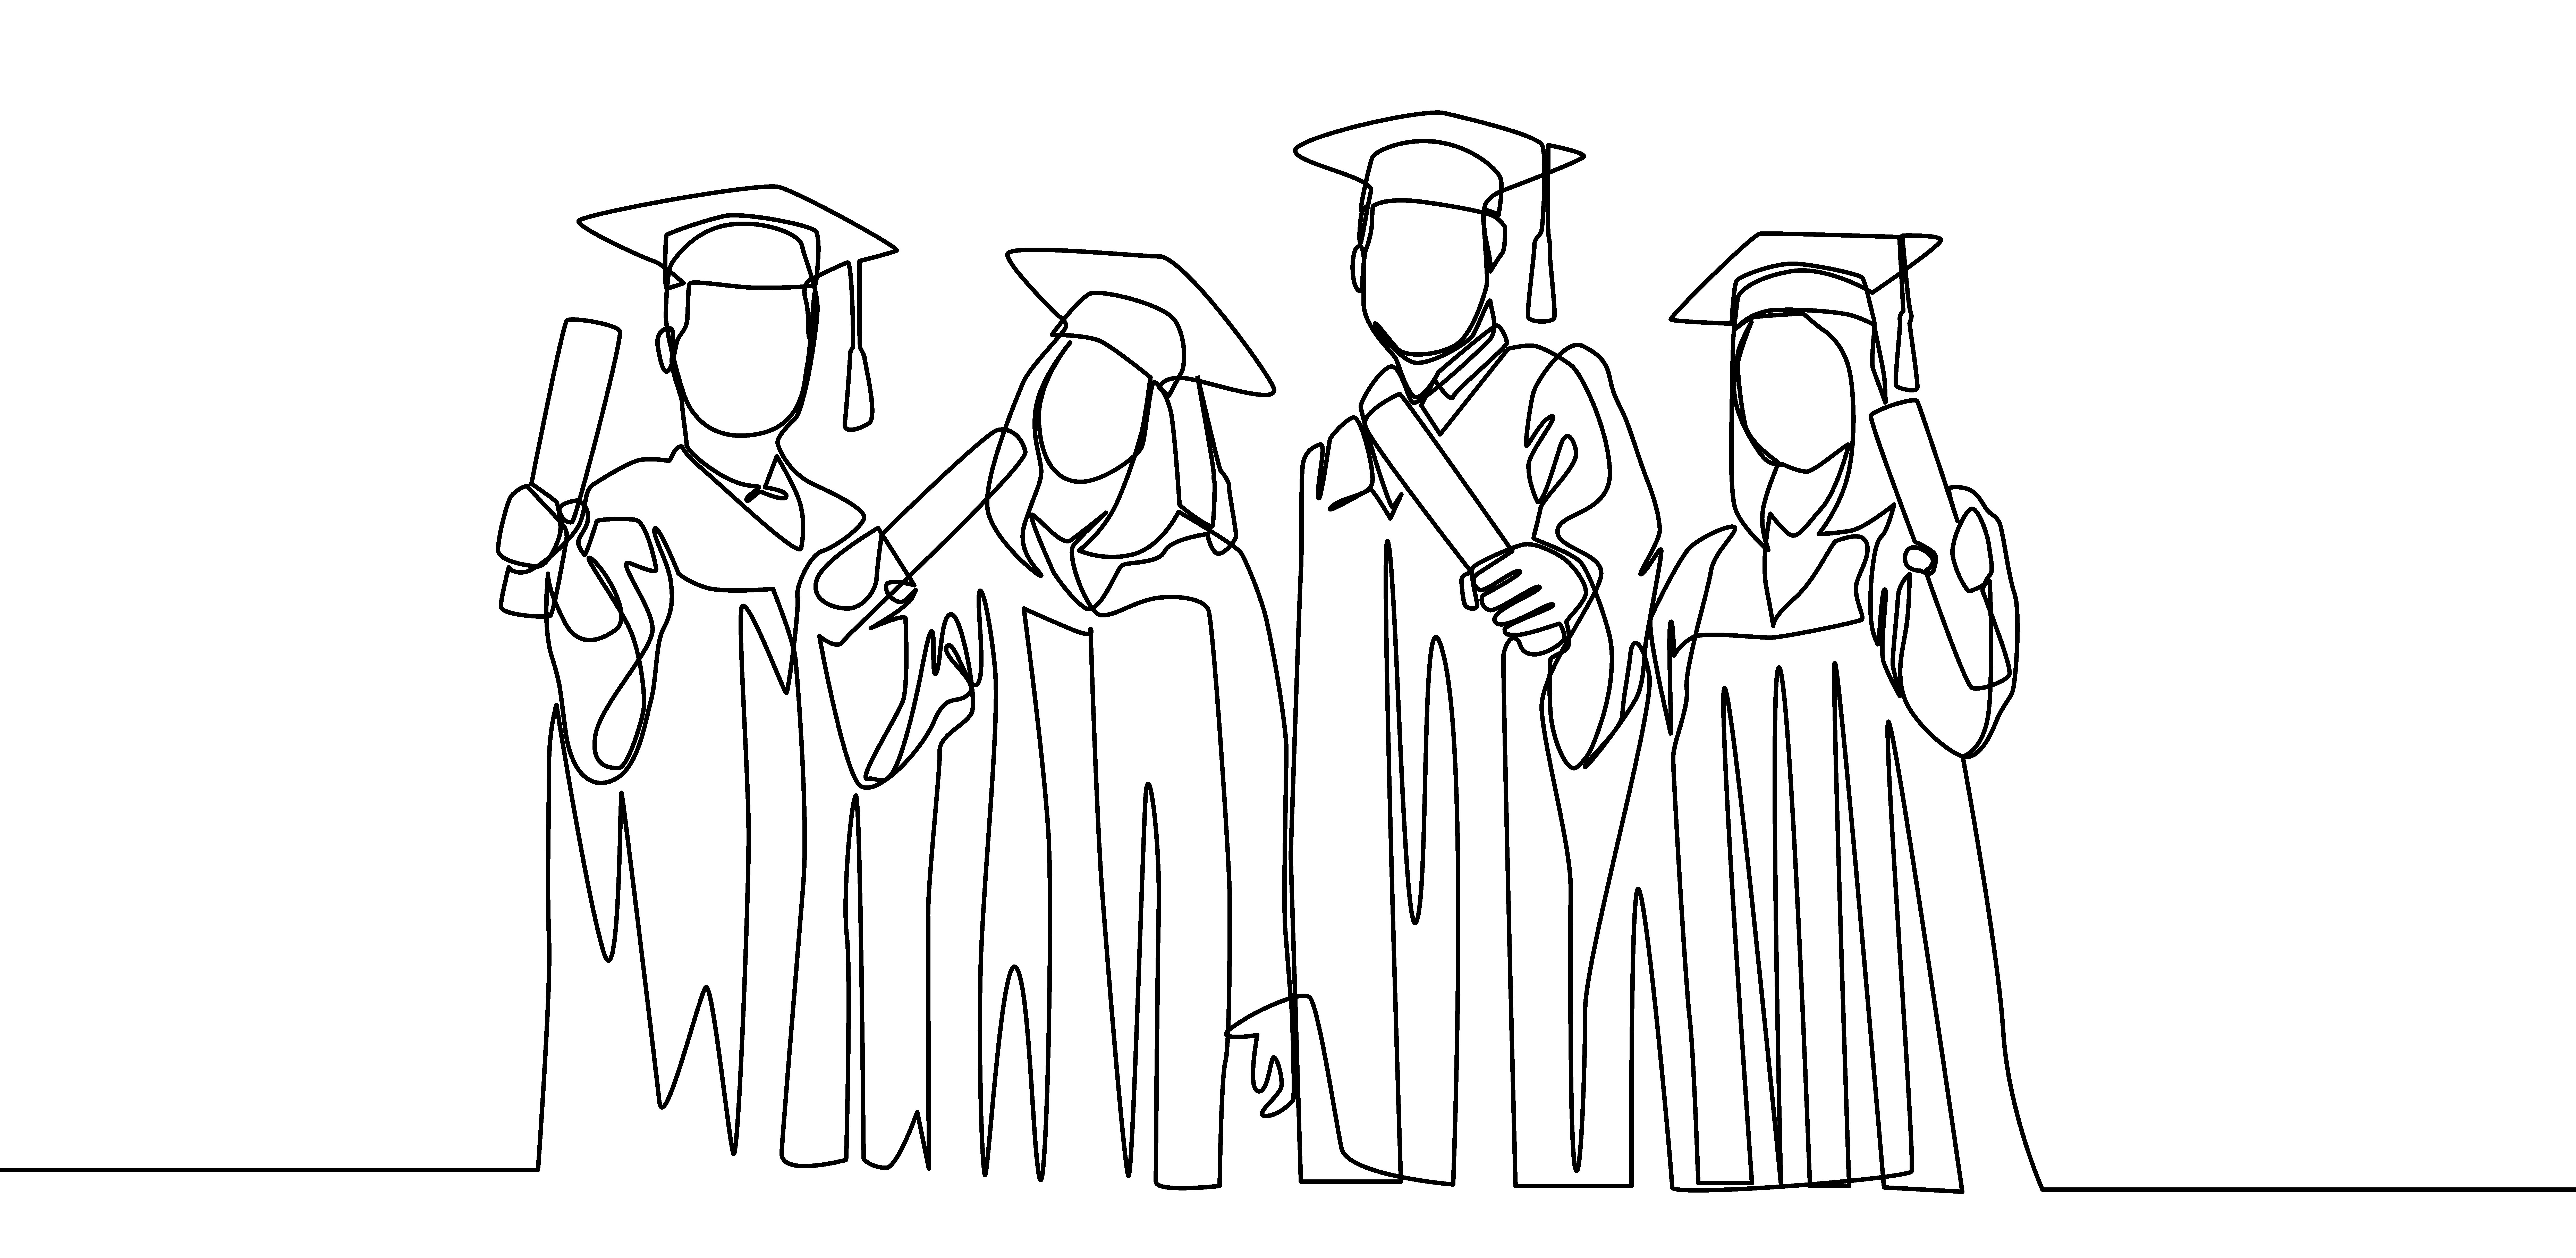 graduates line drawing